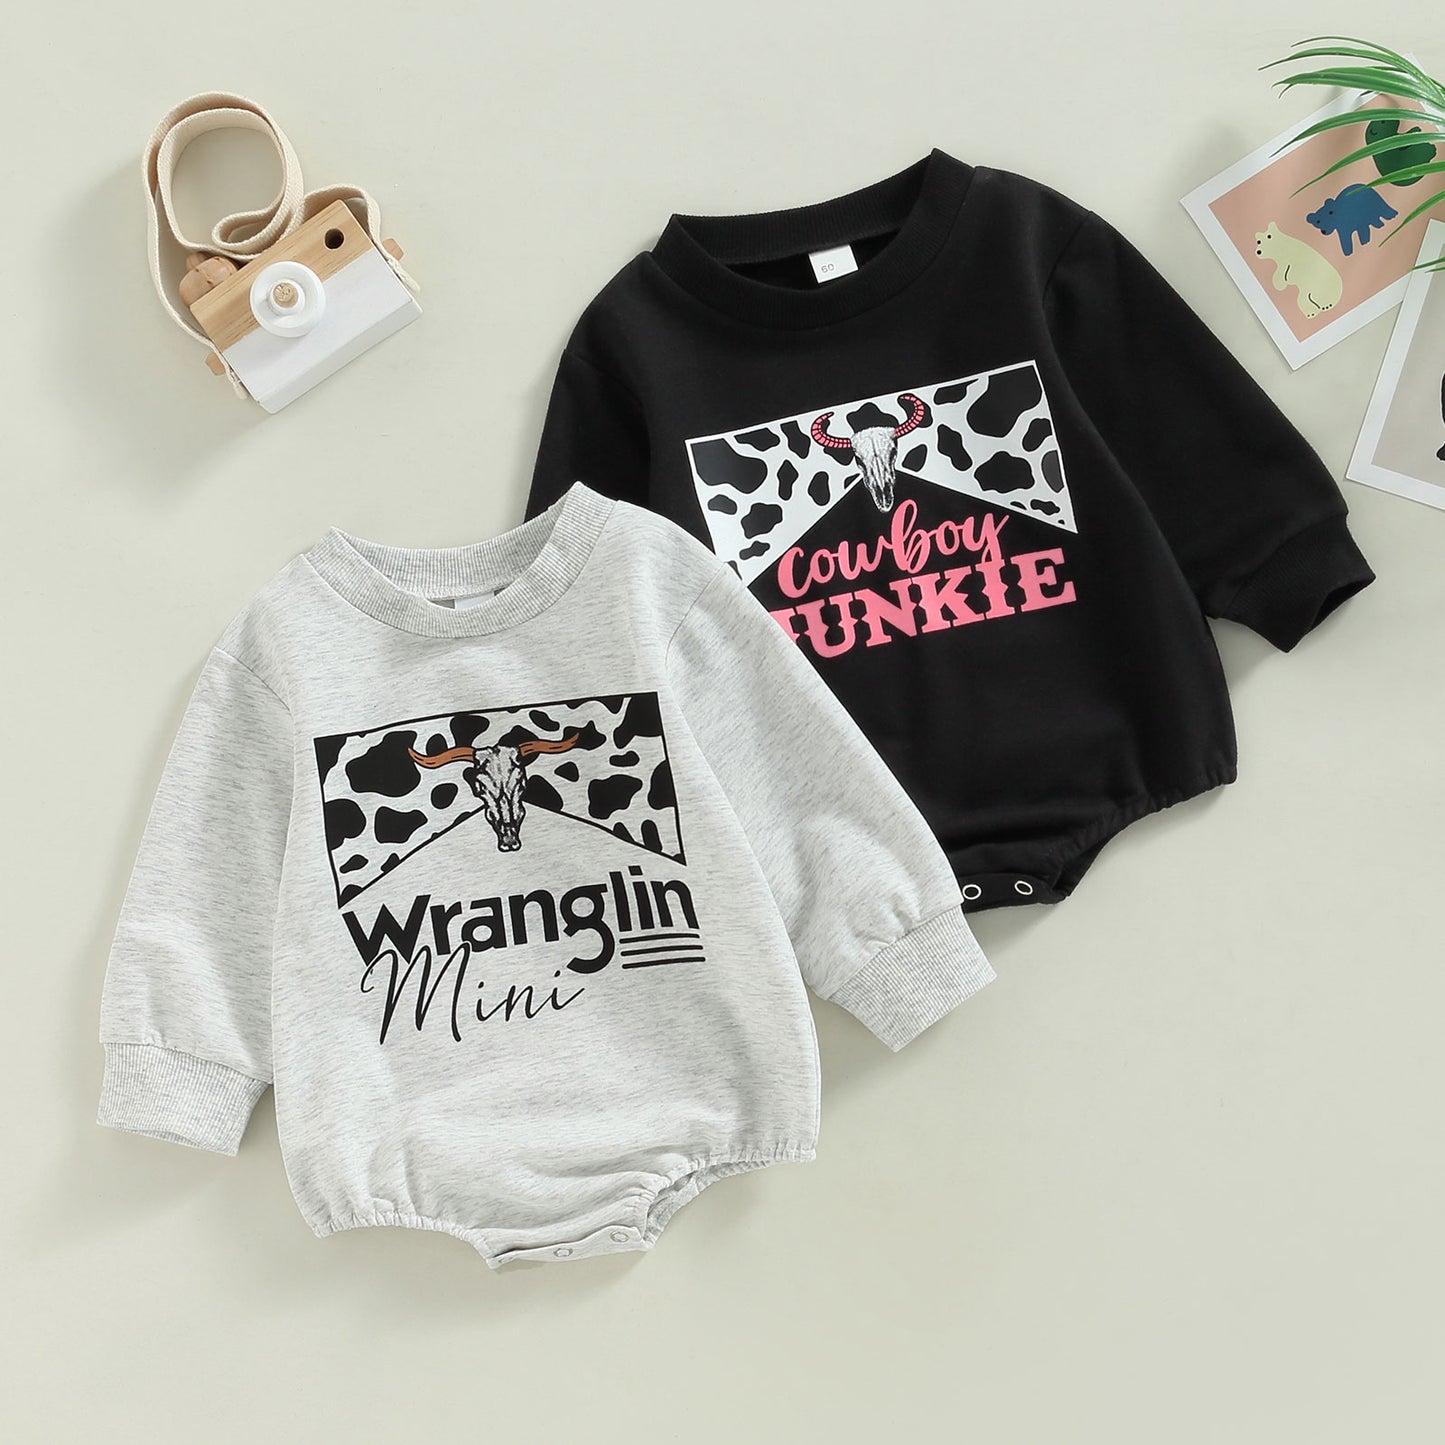 Wranglin/Cowboy Sweatshirts